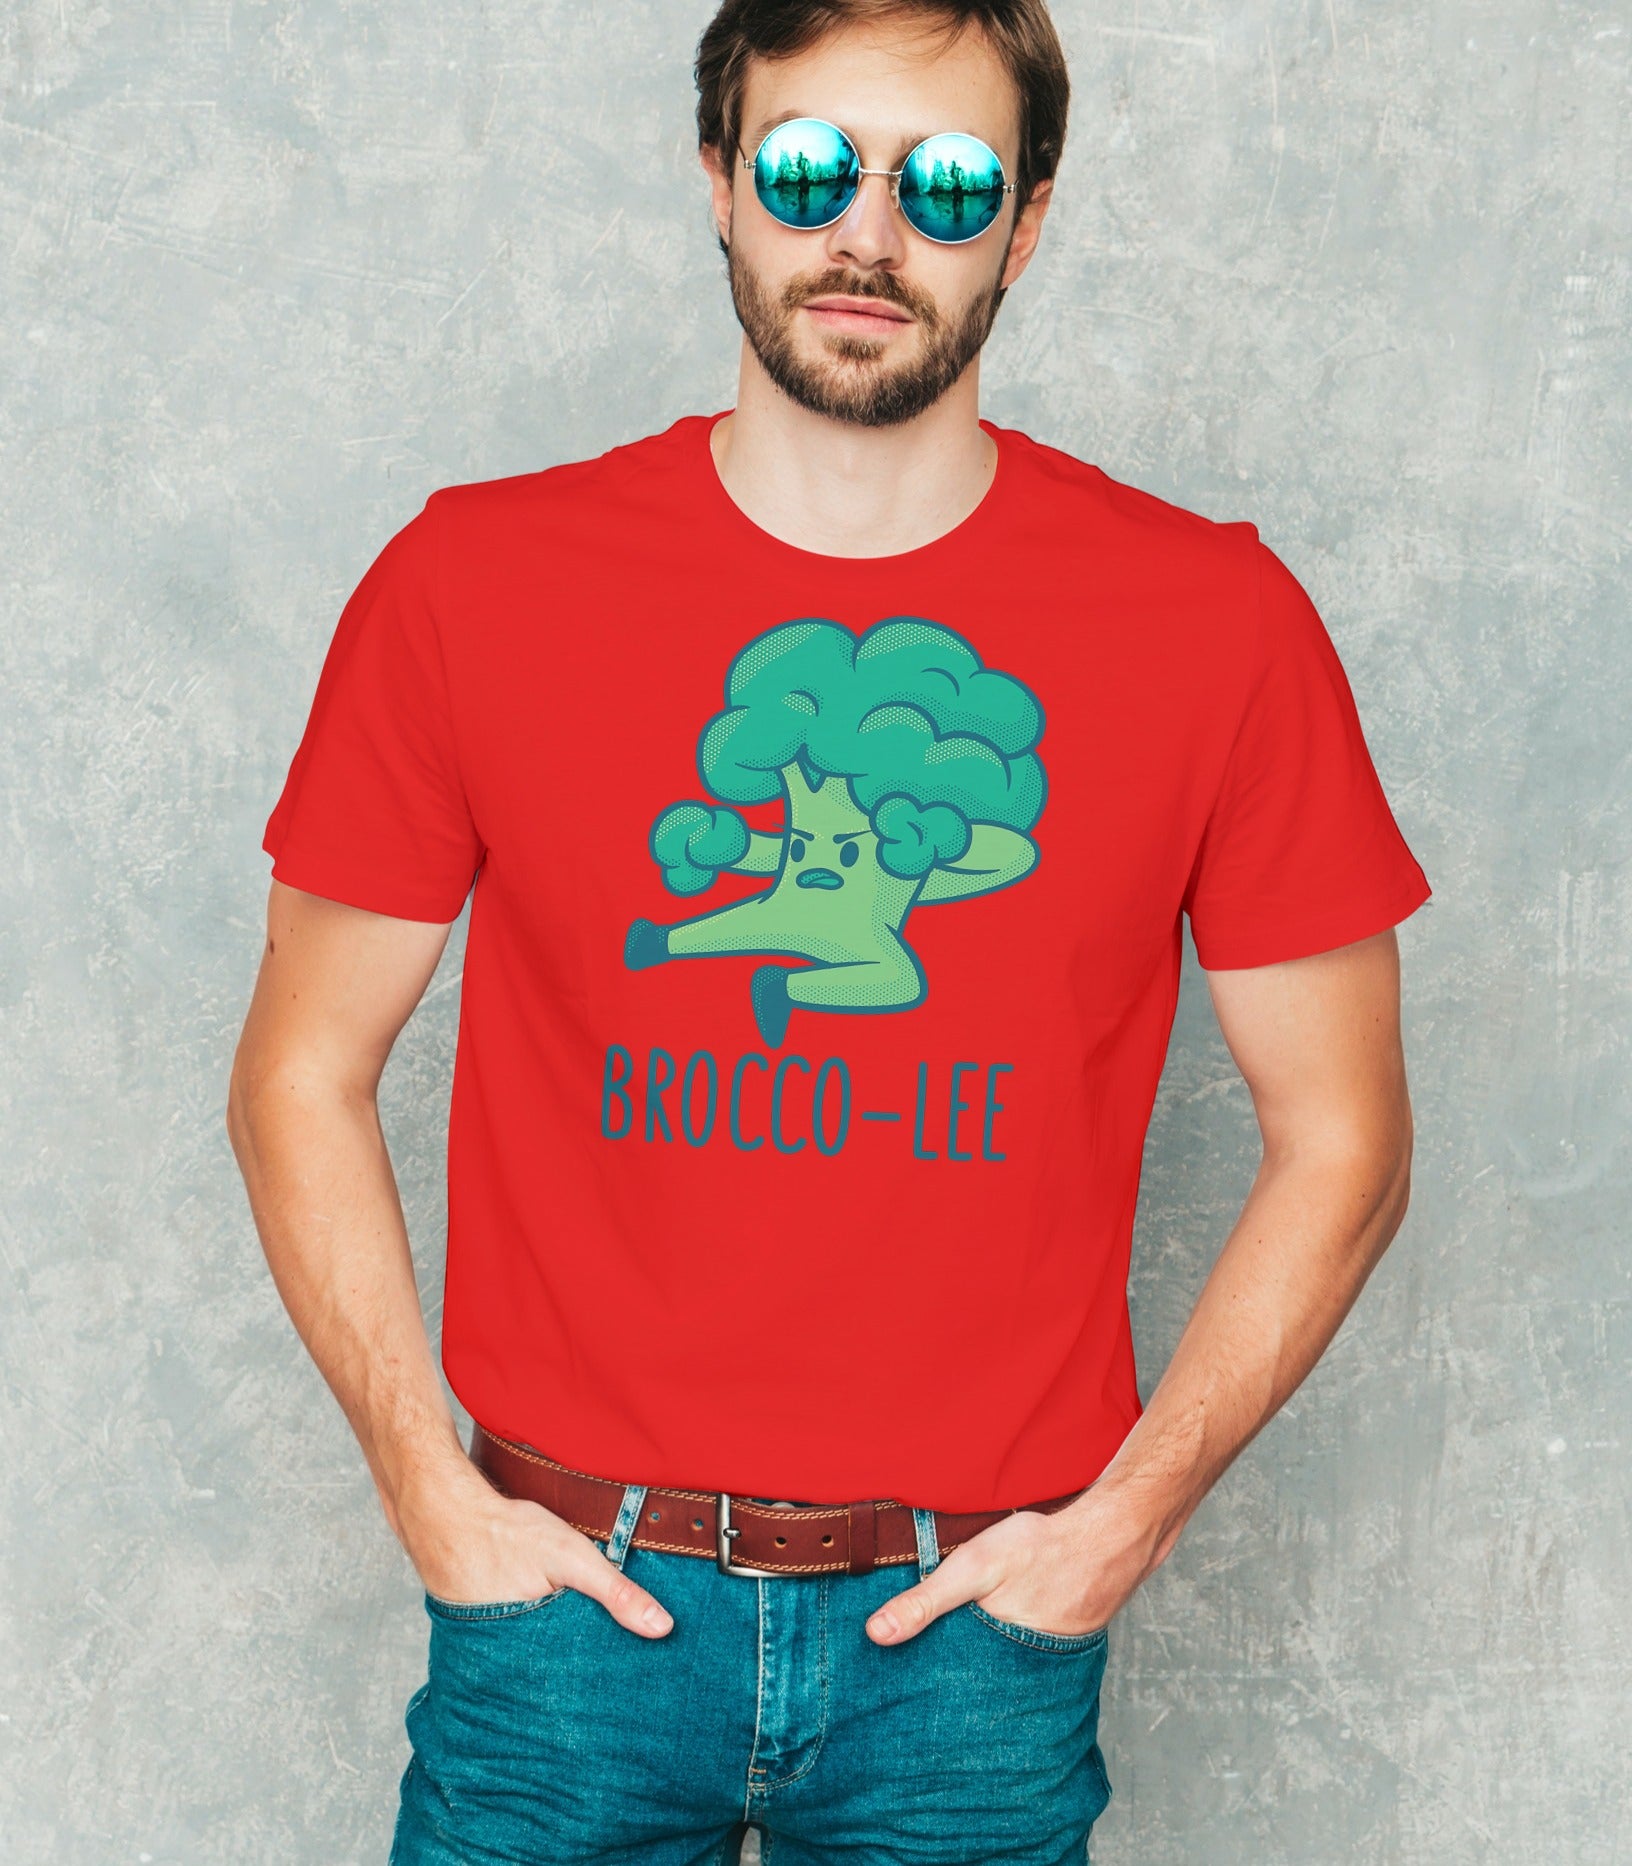 Brocco Lee Vegan  Half Sleeve Cotton Unisex T-shirt